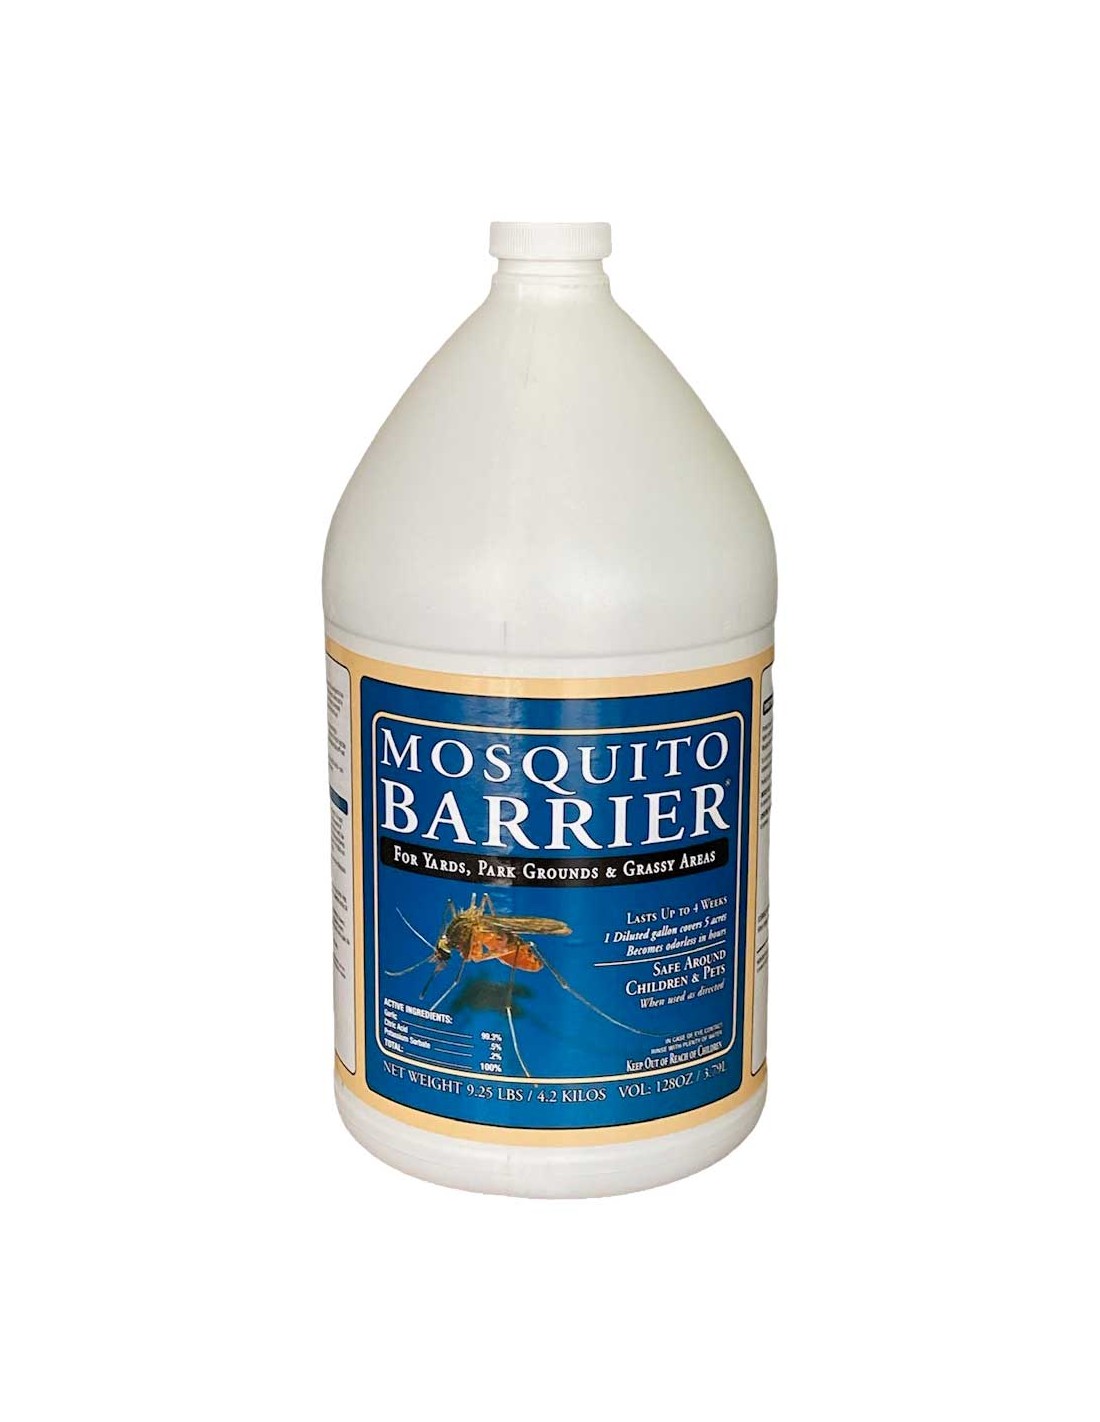 https://www.epestcontrol.com/2265-thickbox_default/Mosquito-Barrier-Garlic-Oil-Repellent.jpg